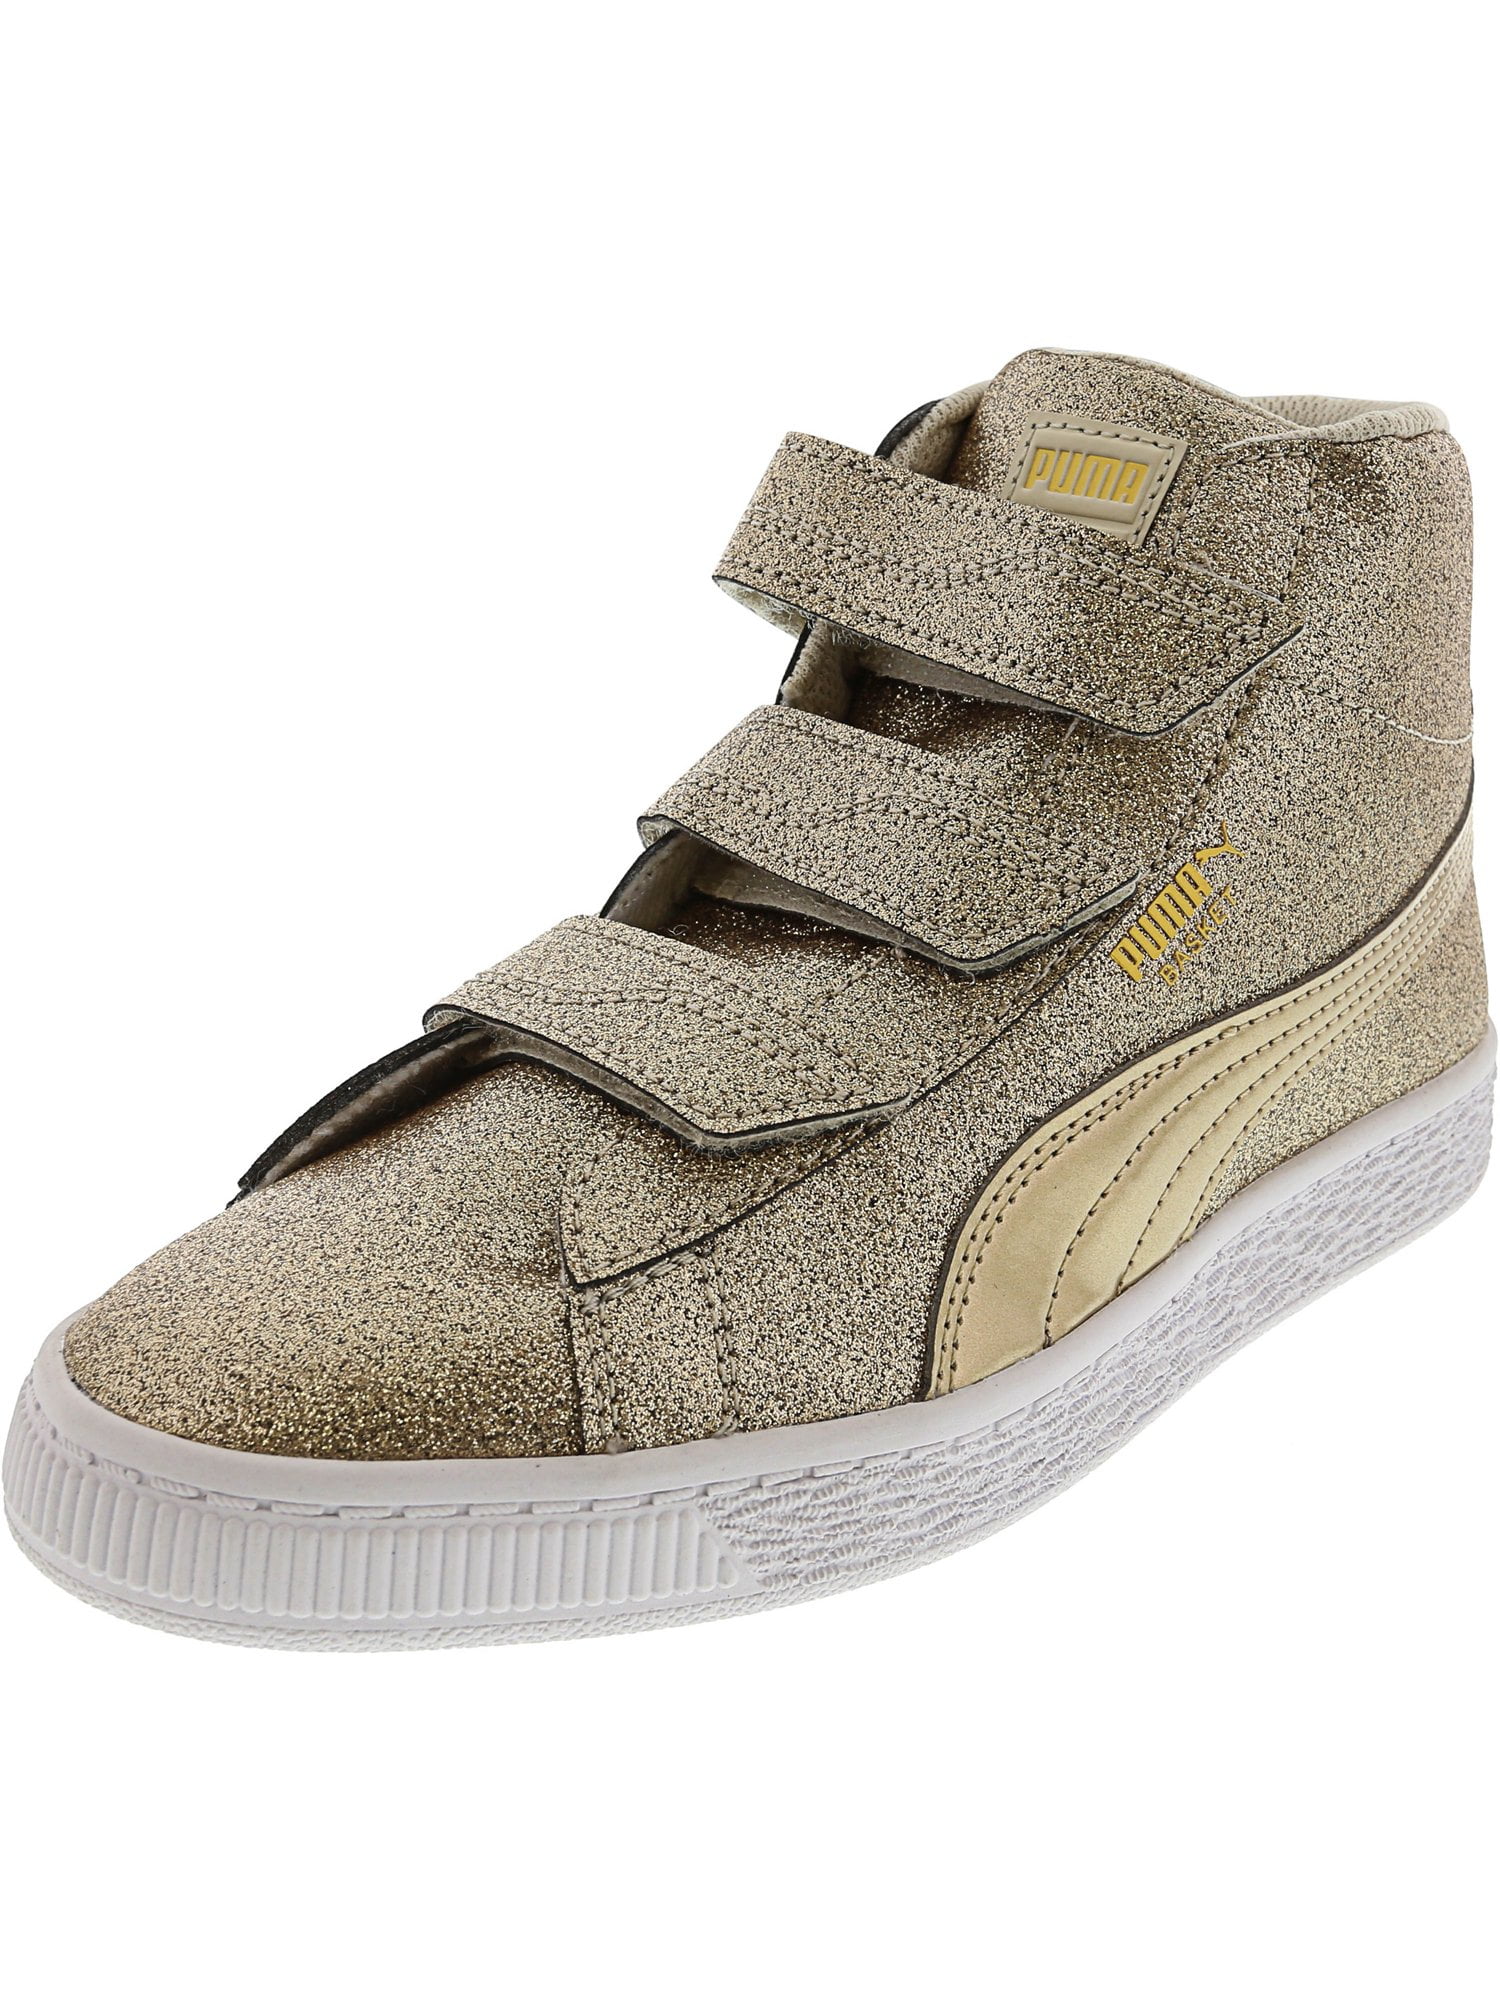 compromis Gevaar Ademen Puma Basket Mid Strap Glitz Birch Mid-Top Fashion Sneaker - 10.5M -  Walmart.com